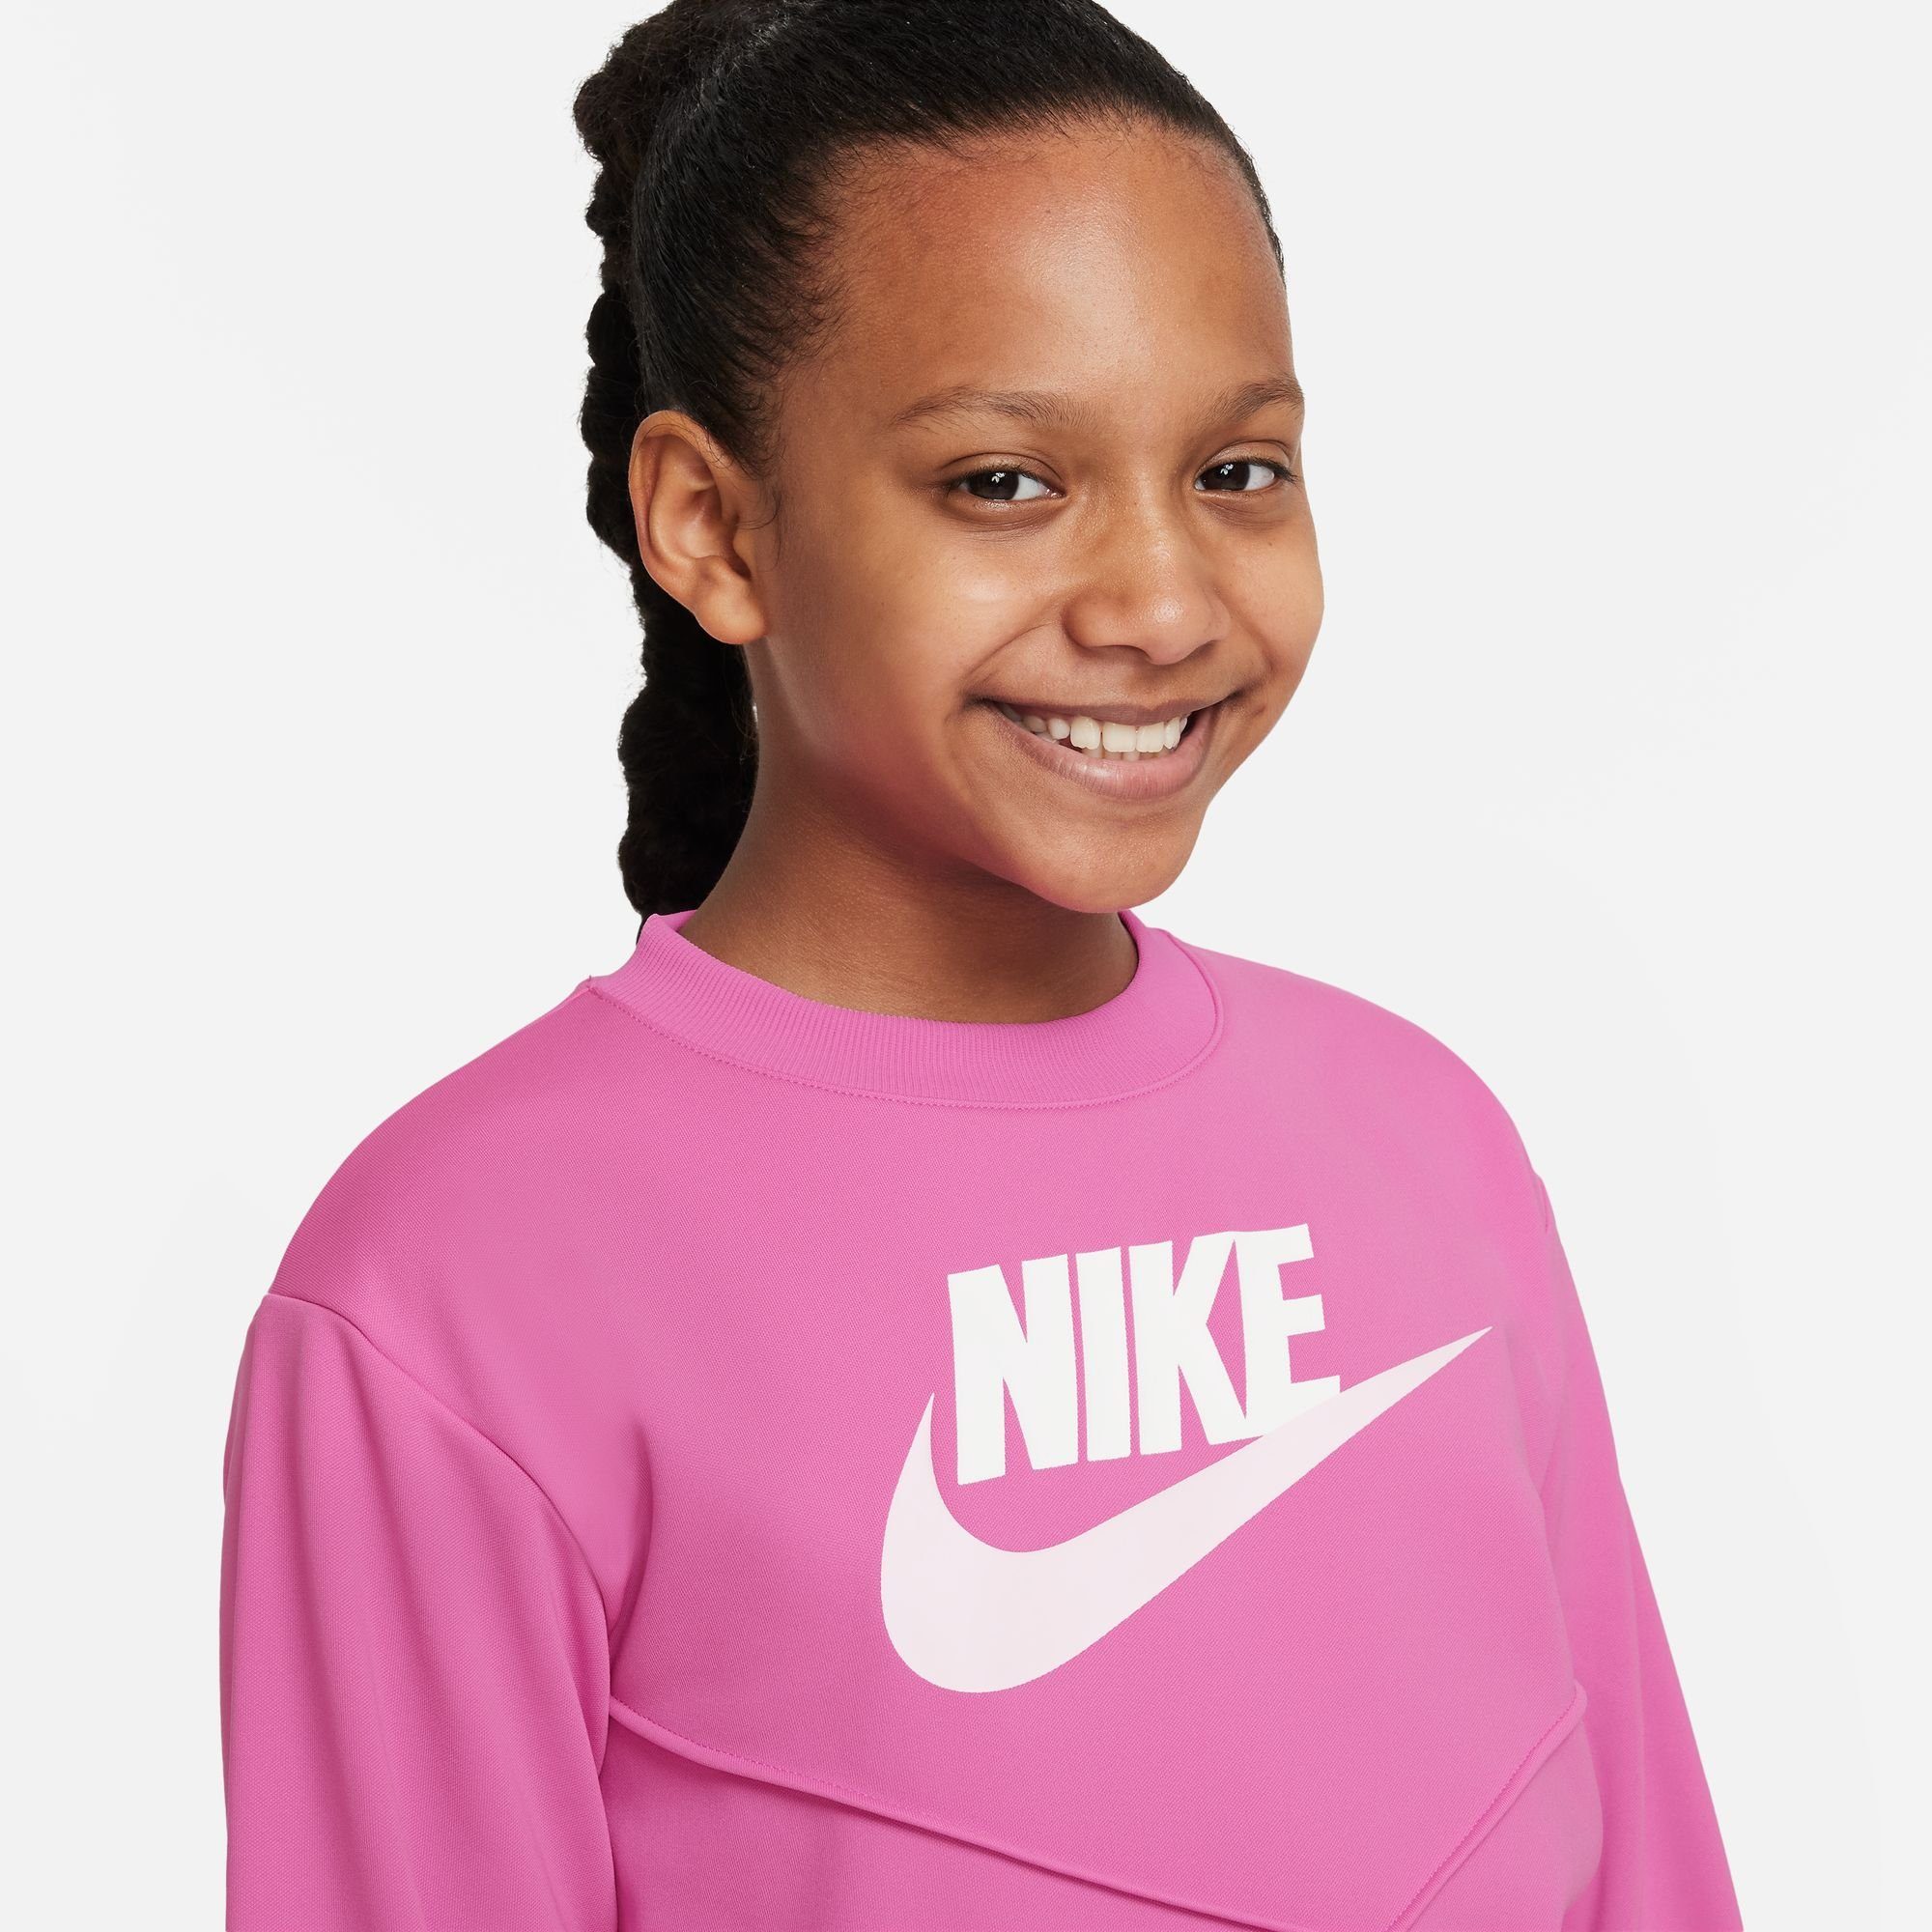 Nike Sportswear Trainingsanzug BIG KIDS' PLAYFUL PINK/WHITE/WHITE TRACKSUIT